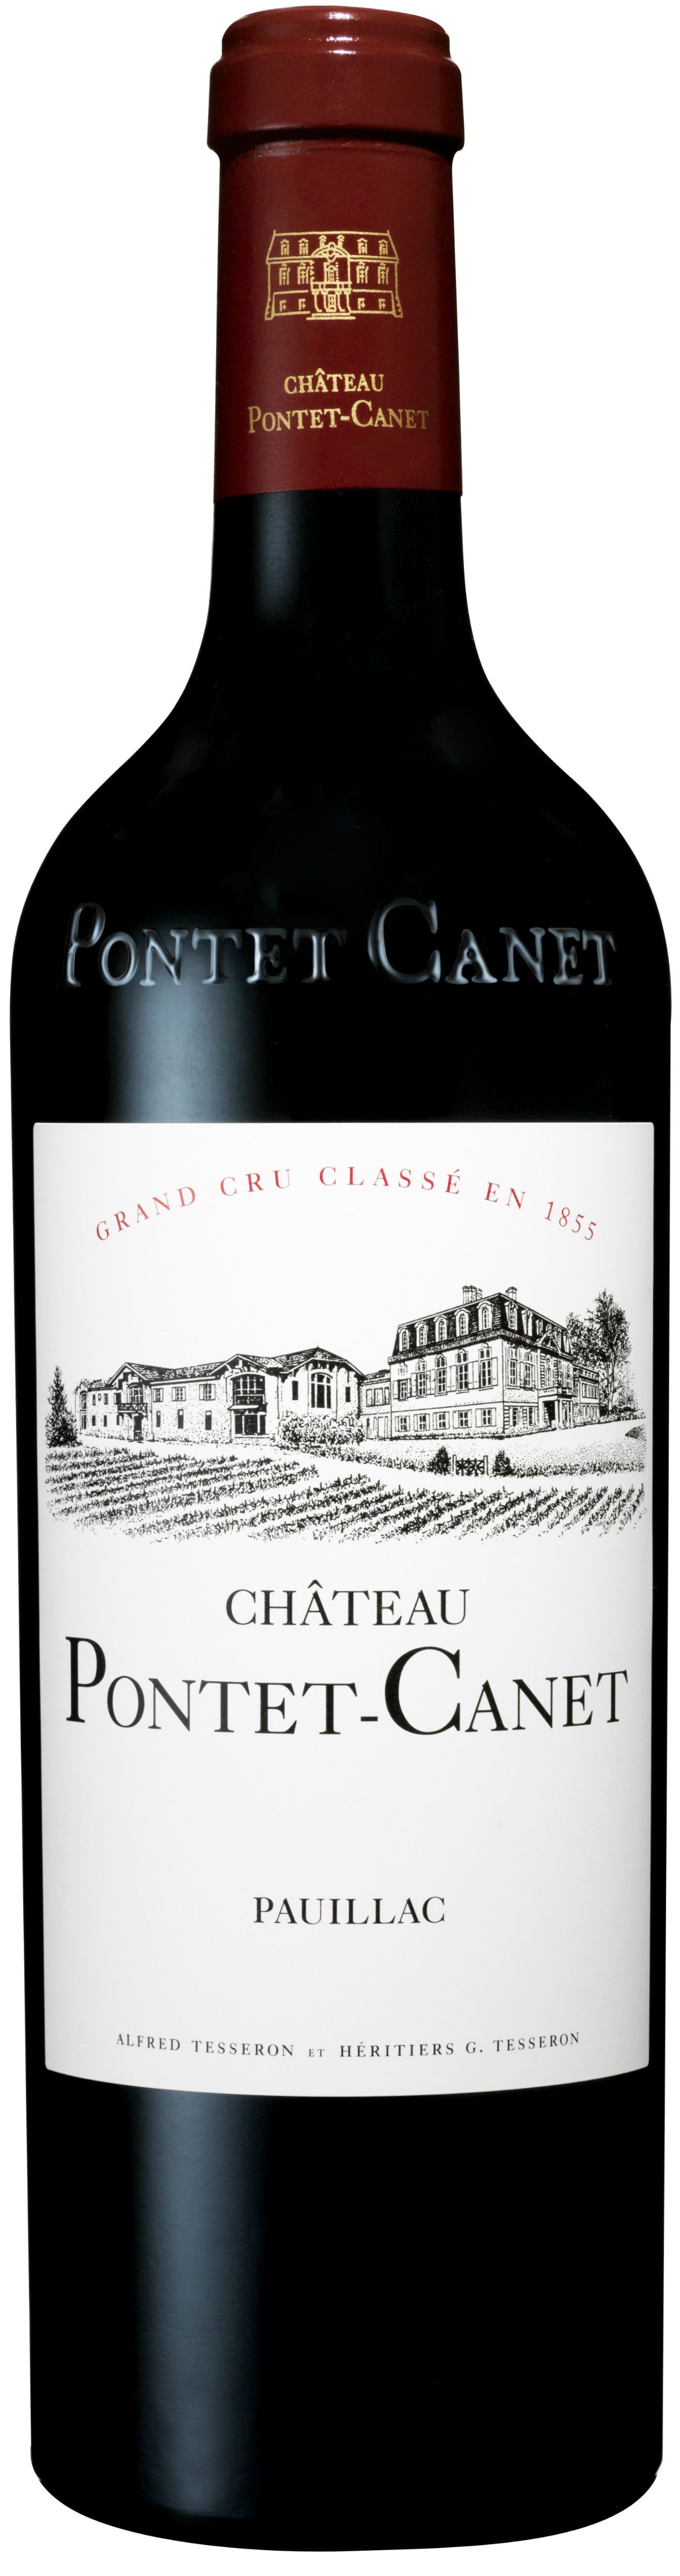 Chateau Pontet-Canet, 2013 (In 6-btls Box Set)